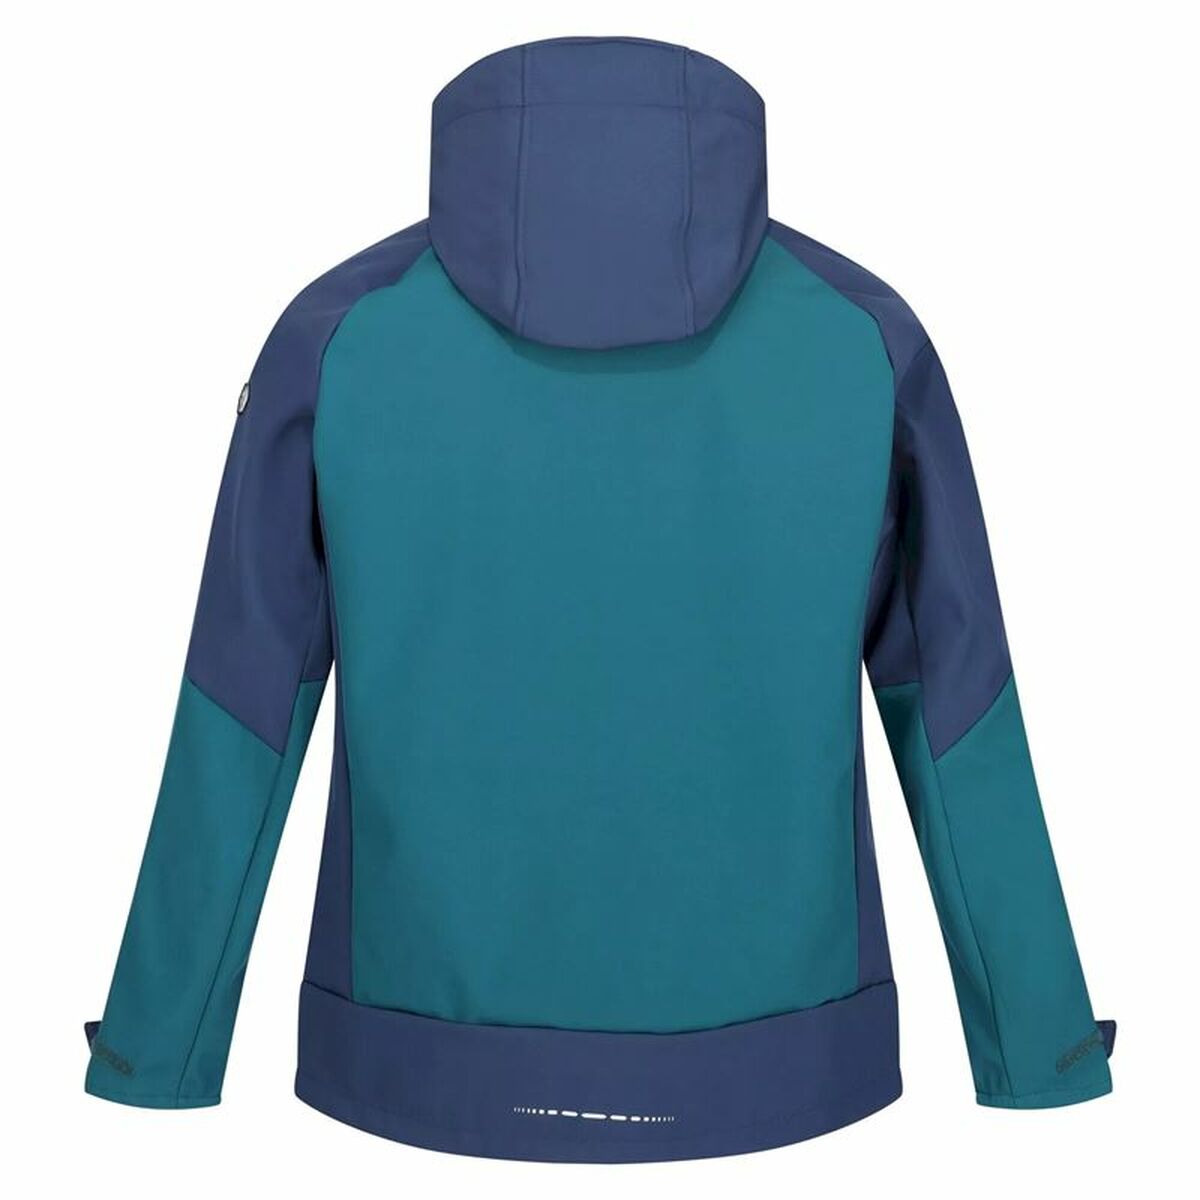 Sports jacket for men Regatta Hewitts VII Blue green hood